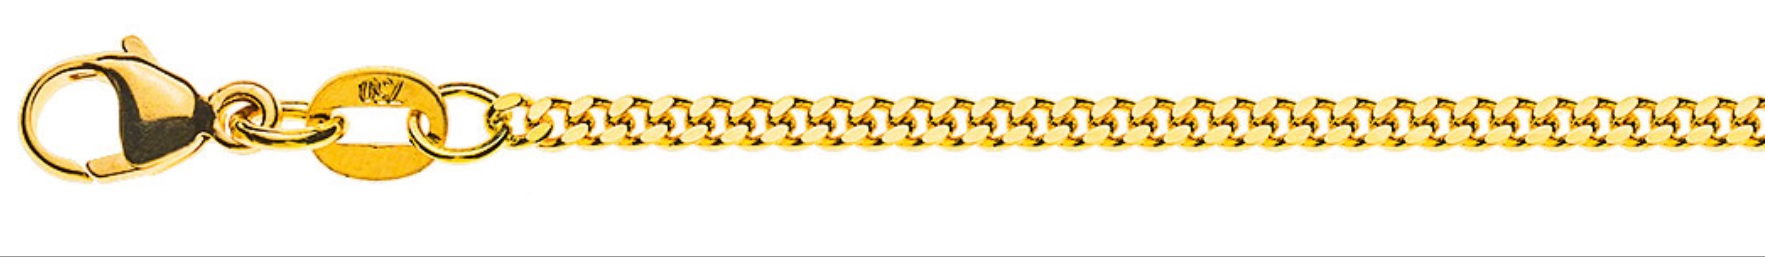 AURONOS Prestige Necklace yellow gold 18K curb chain polished 40cm 2.0mm